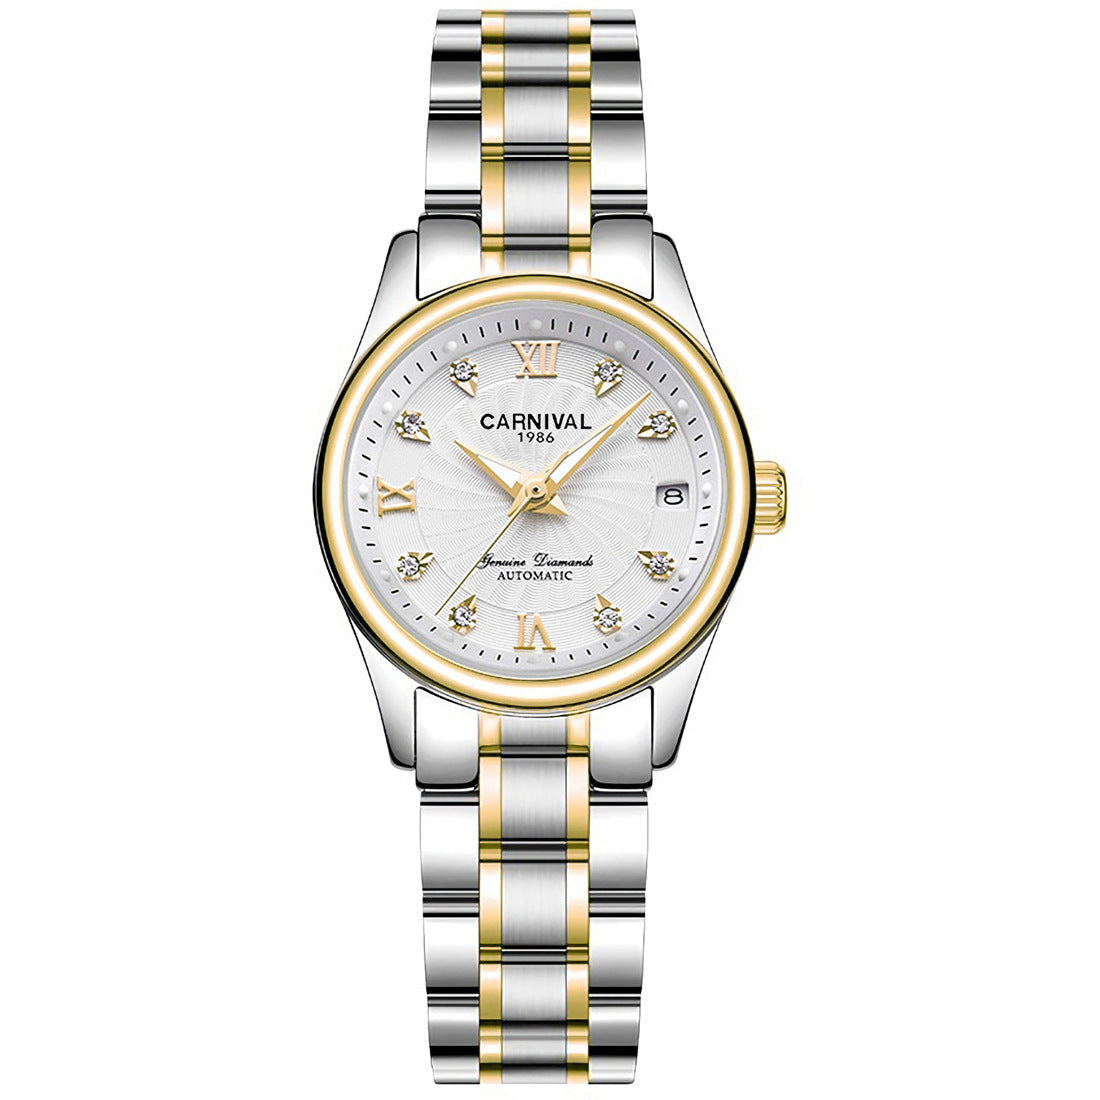 Women's watch is automatic